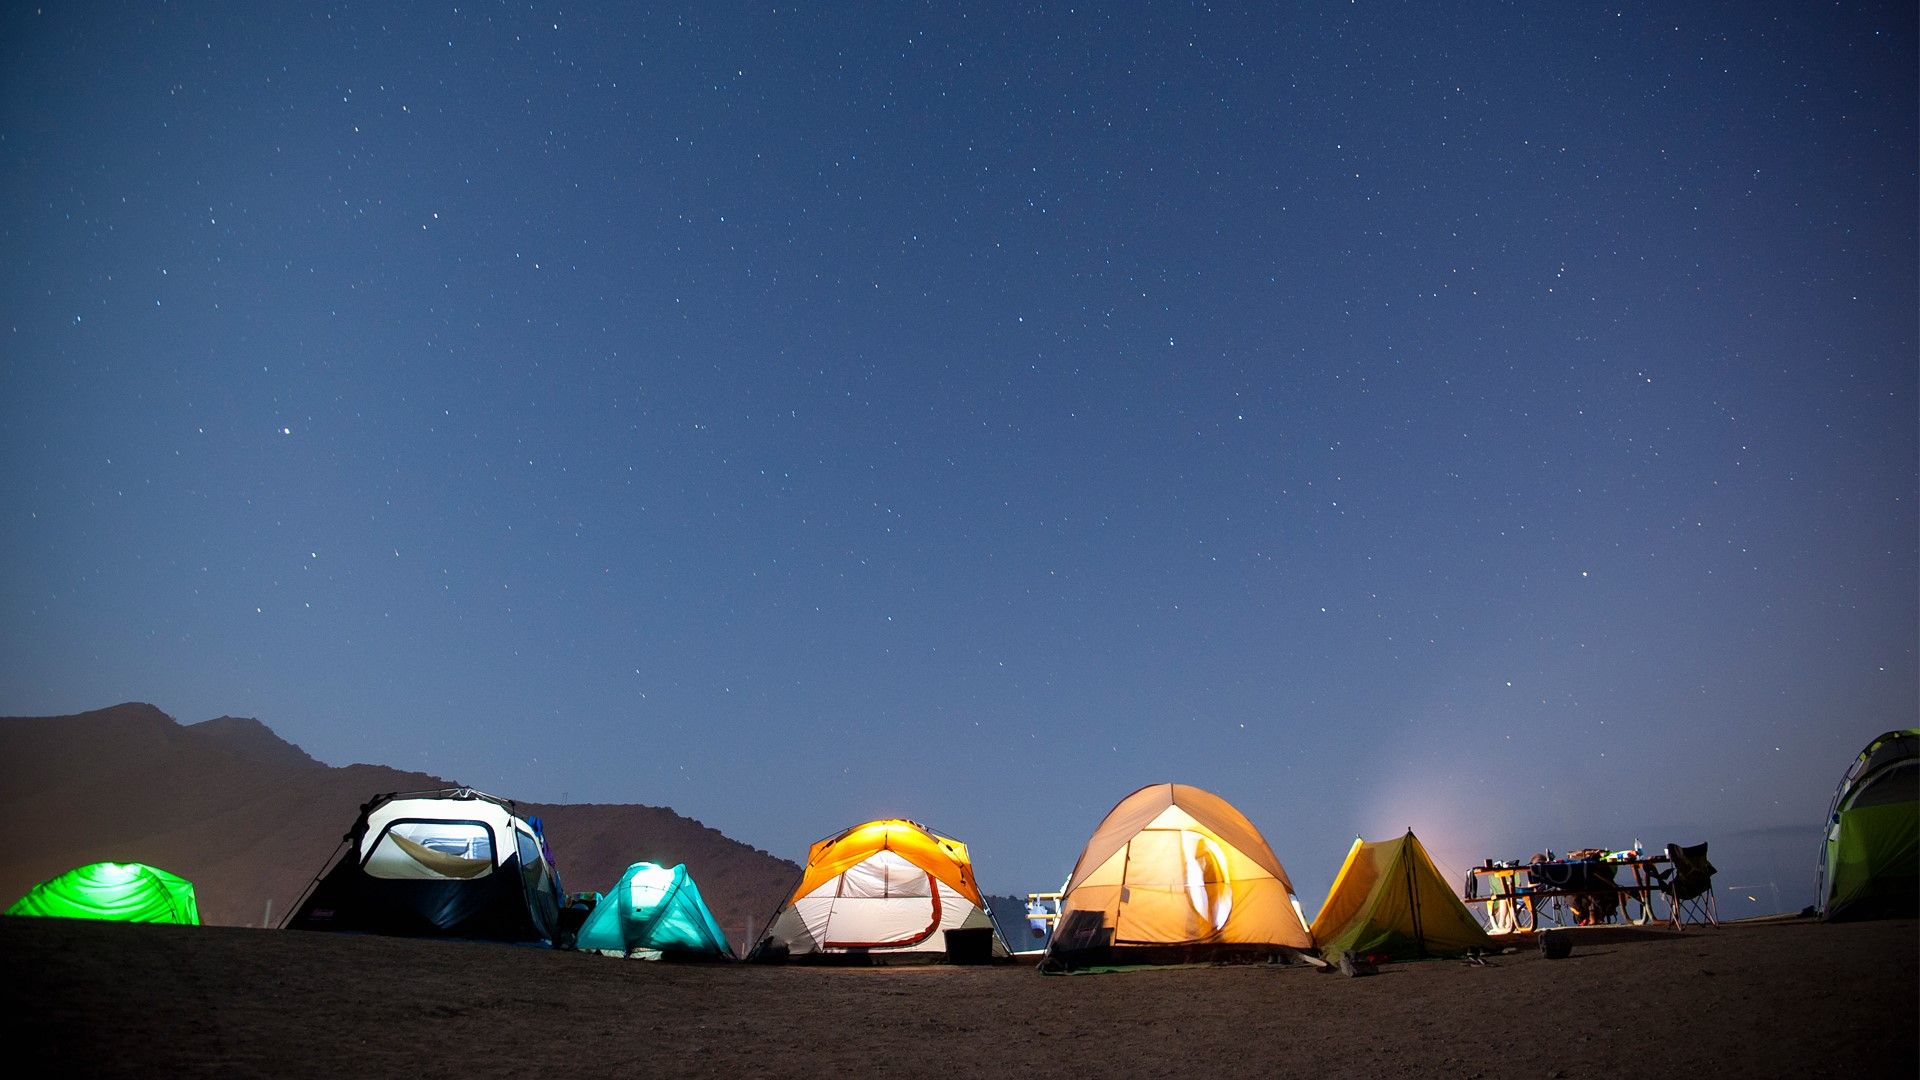 Windows 10 camp. Палатка виндовс 10. Кемпинг. Палатка в горах. Палатка на фоне звездного неба.